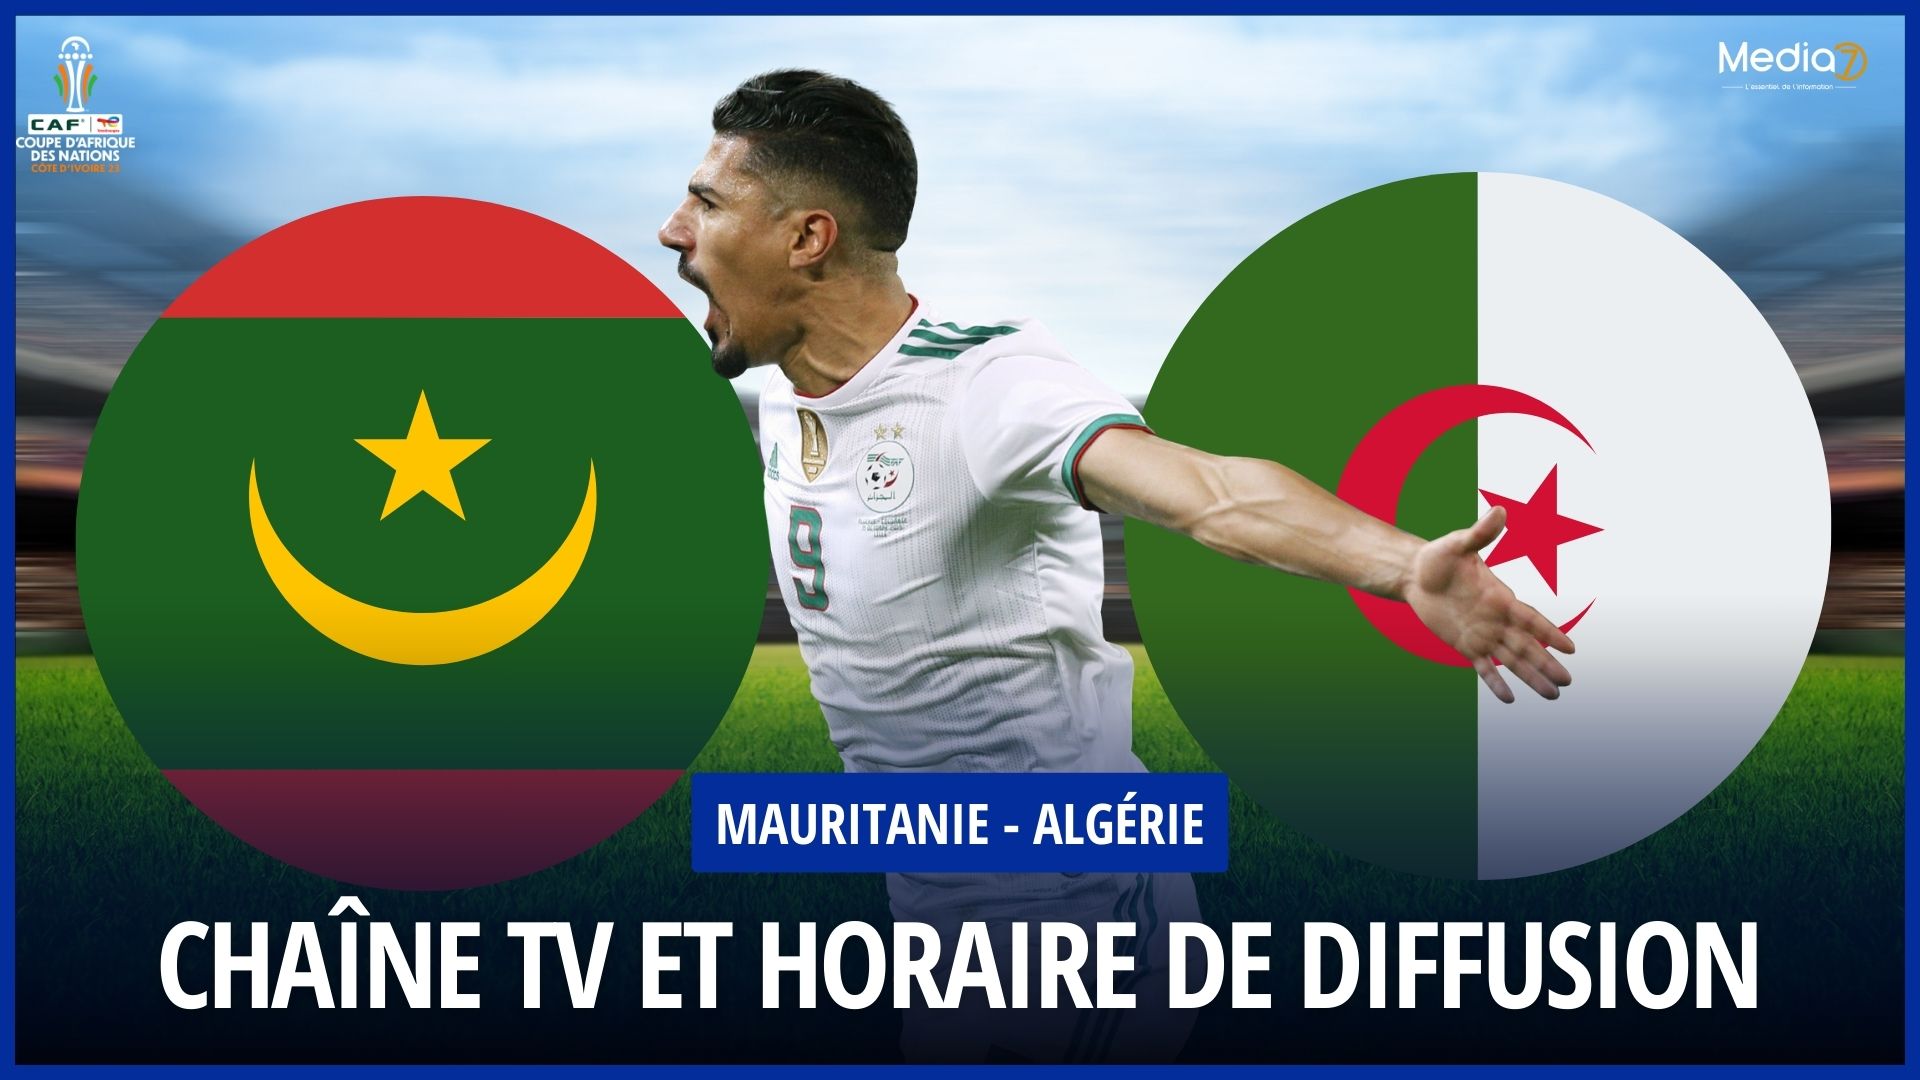 Mauritania - Algeria match live: TV channel and broadcast time - Media7